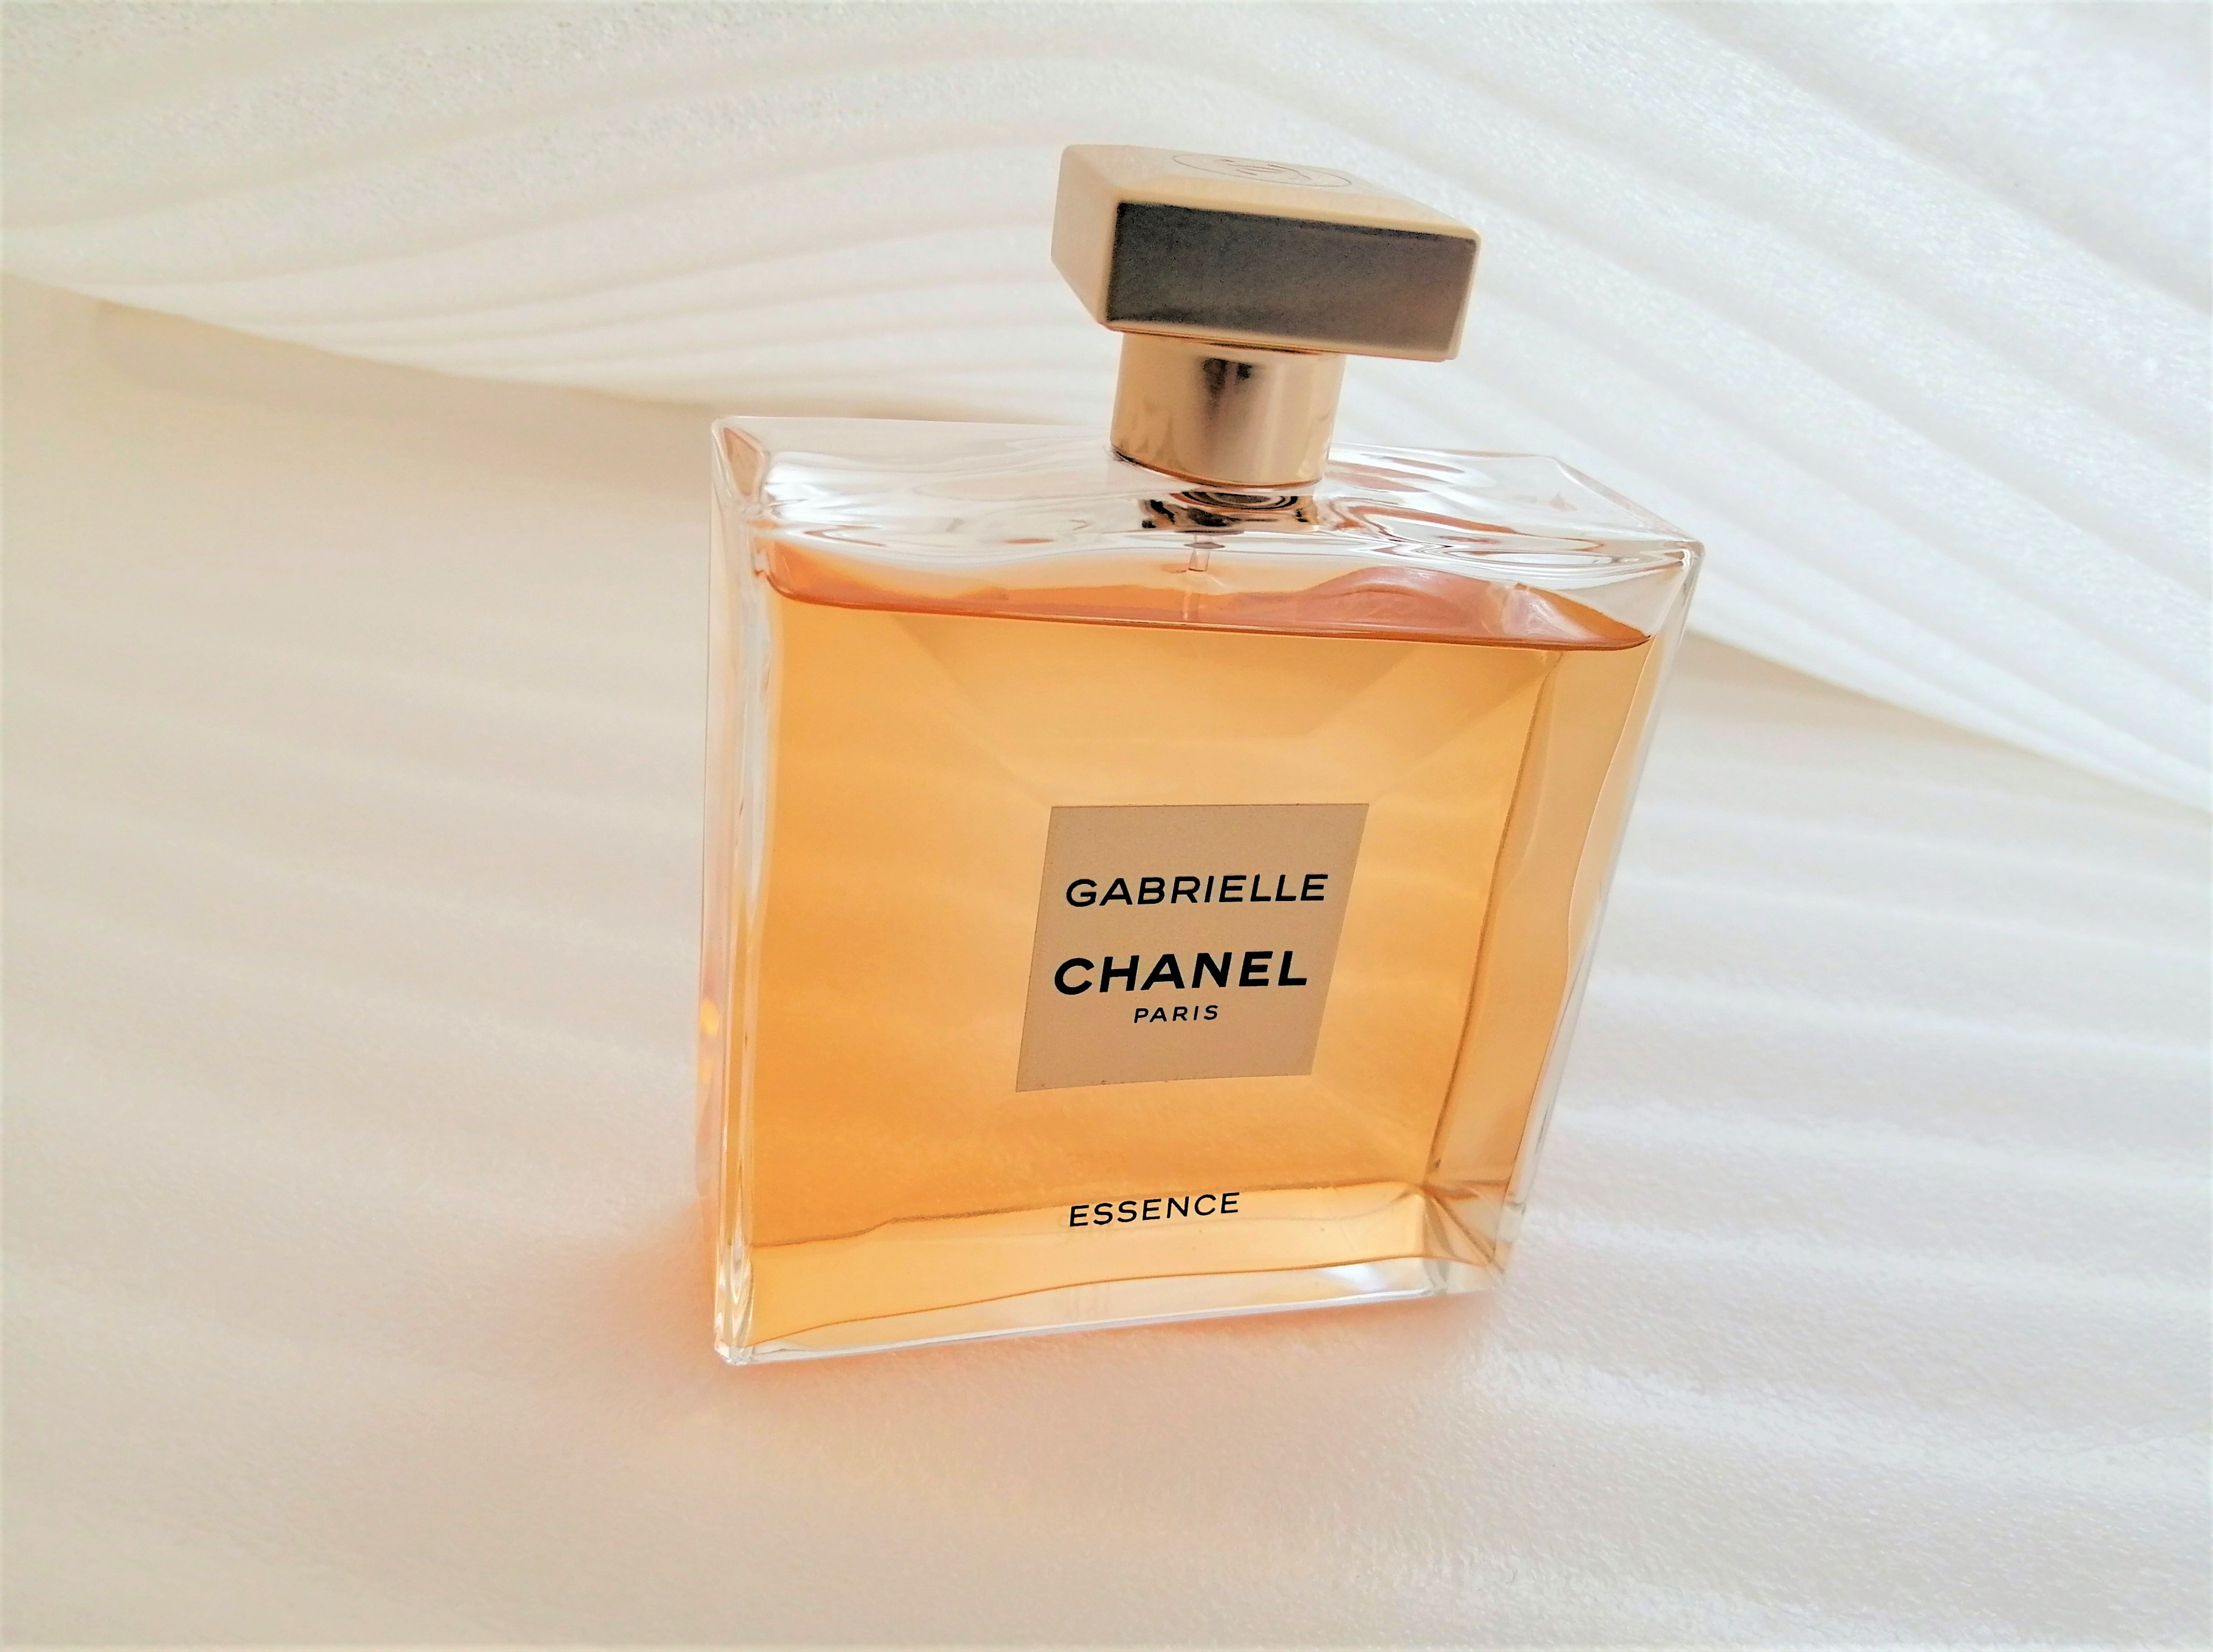 Gabrielle Essence by Chanel 2019